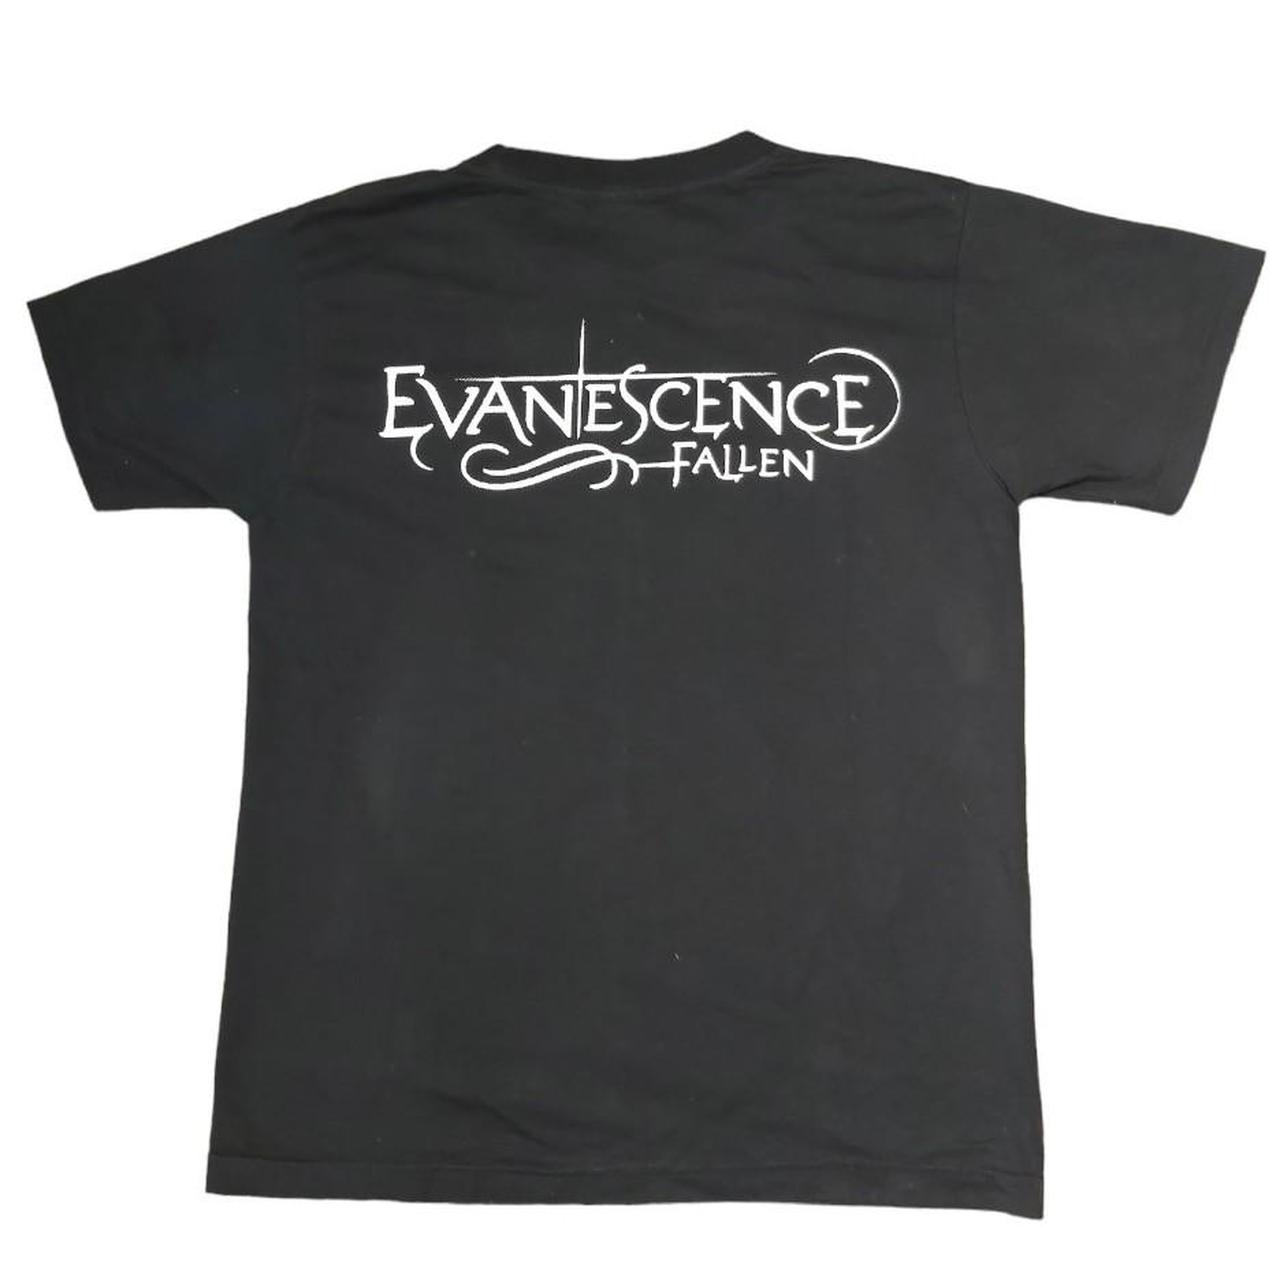 Vintage Evanescence Fallen Album Cover T Shirt Depop